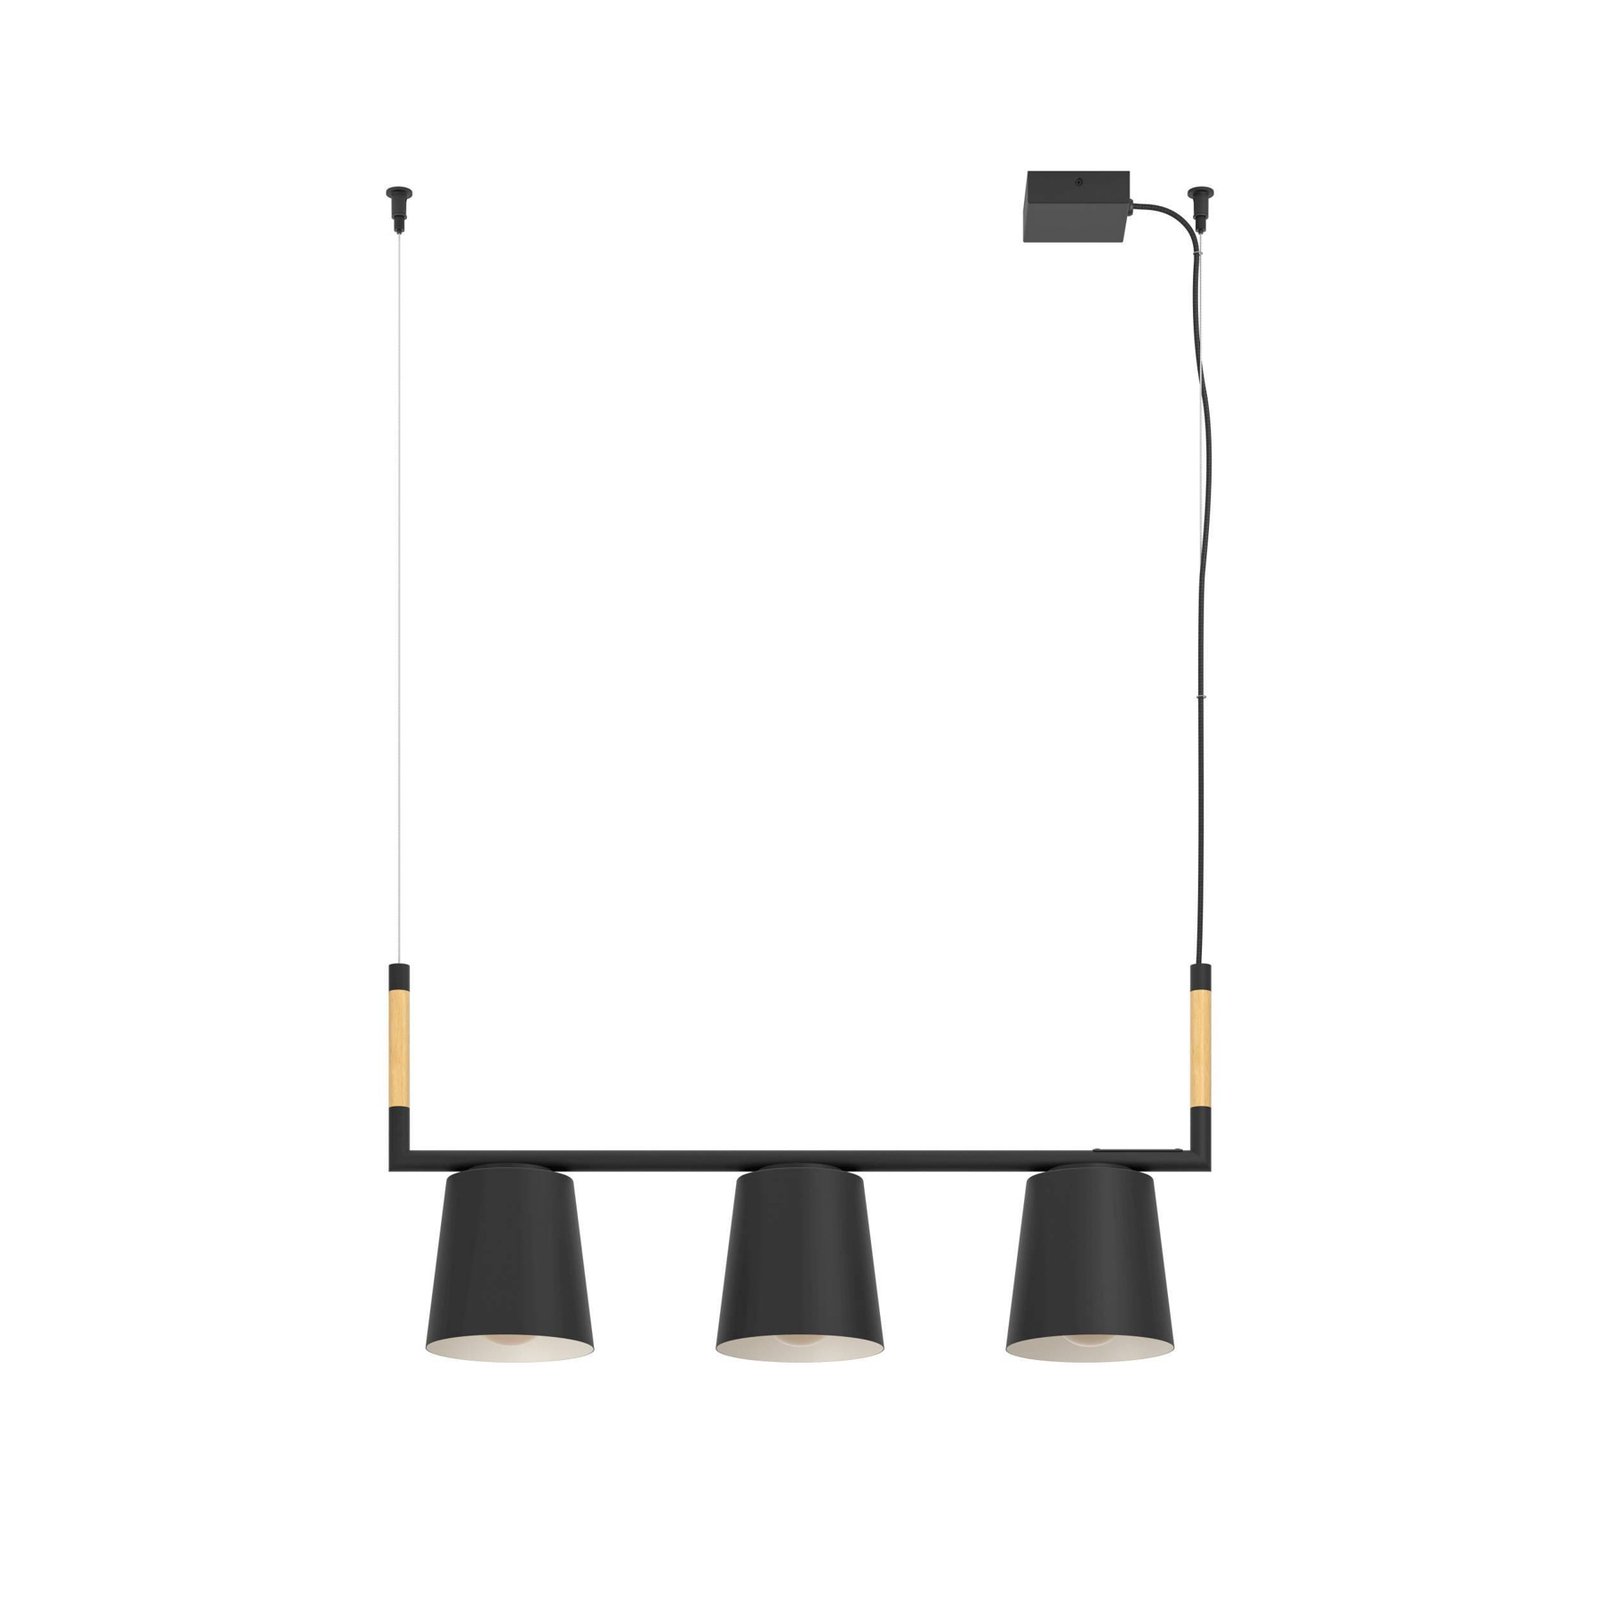 Lacey pendant light, length 78 cm, black, 3-bulb, steel